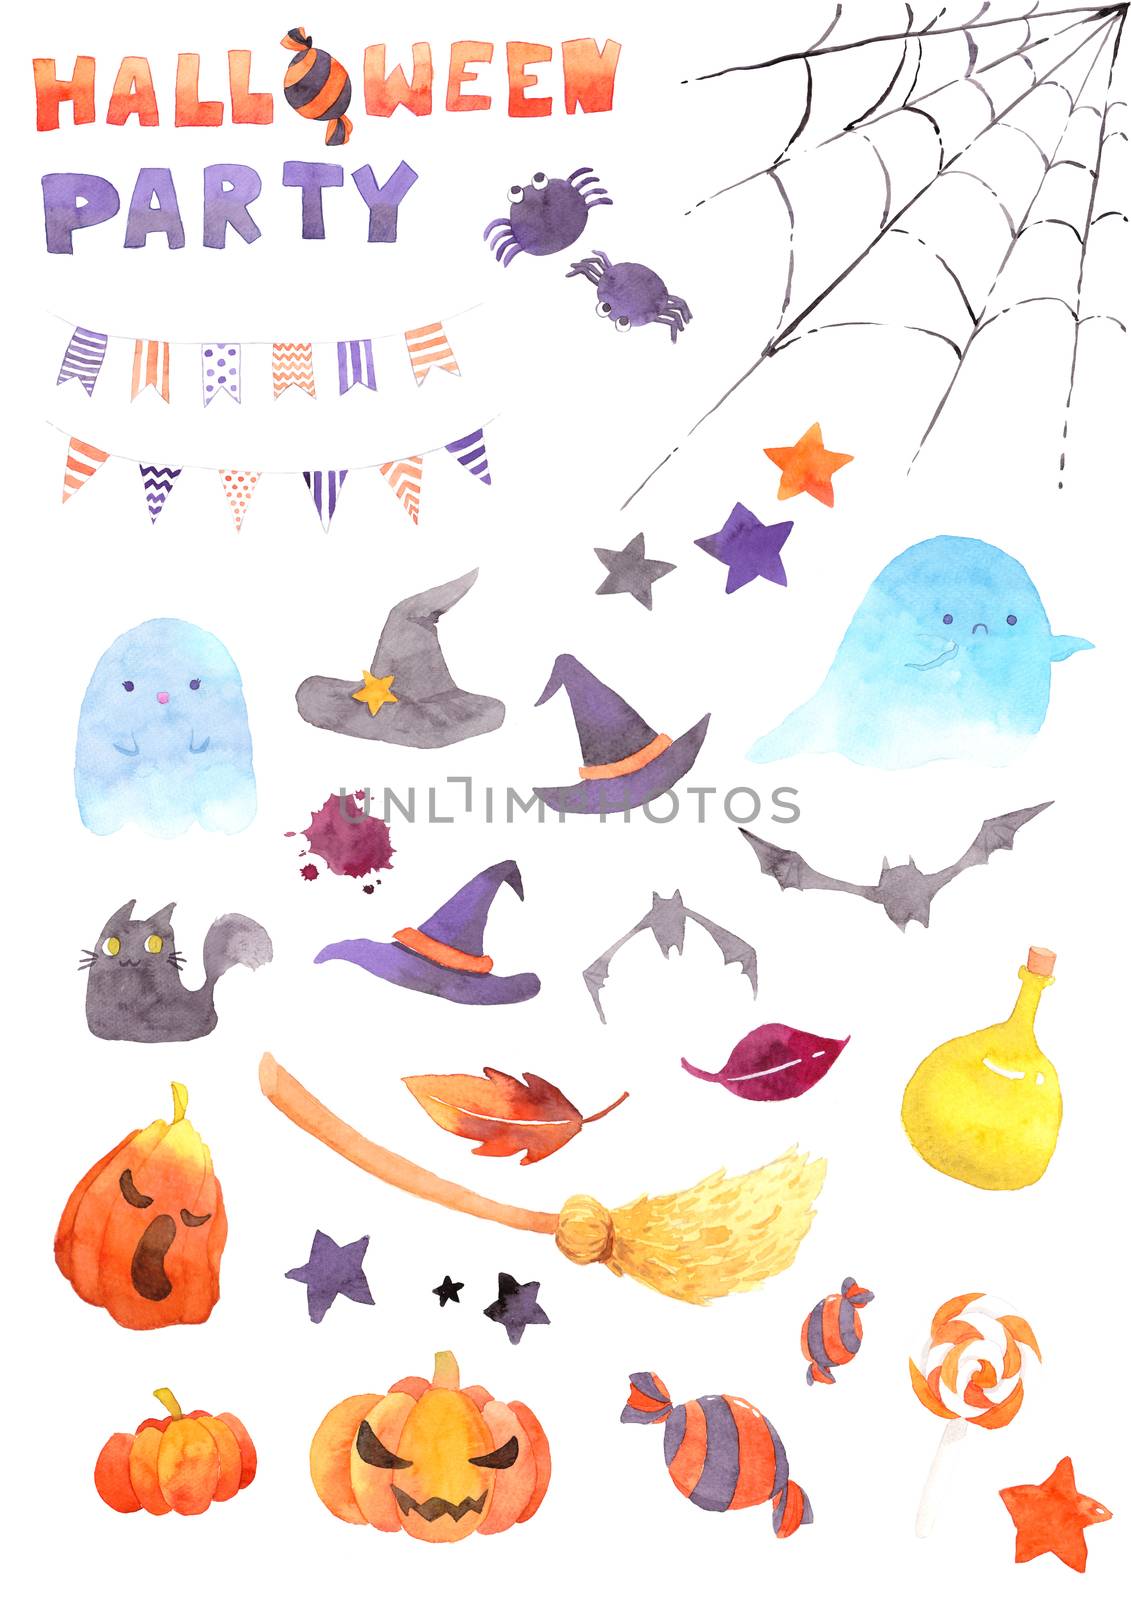 Watercolor Halloween Illustration Set. Funny Cute cartoon baby character, ghost spirit, spider, cobweb, Magic hat, sweets, stars, pumpkin, flag, bat, cat, leave, jack, good for holiday design